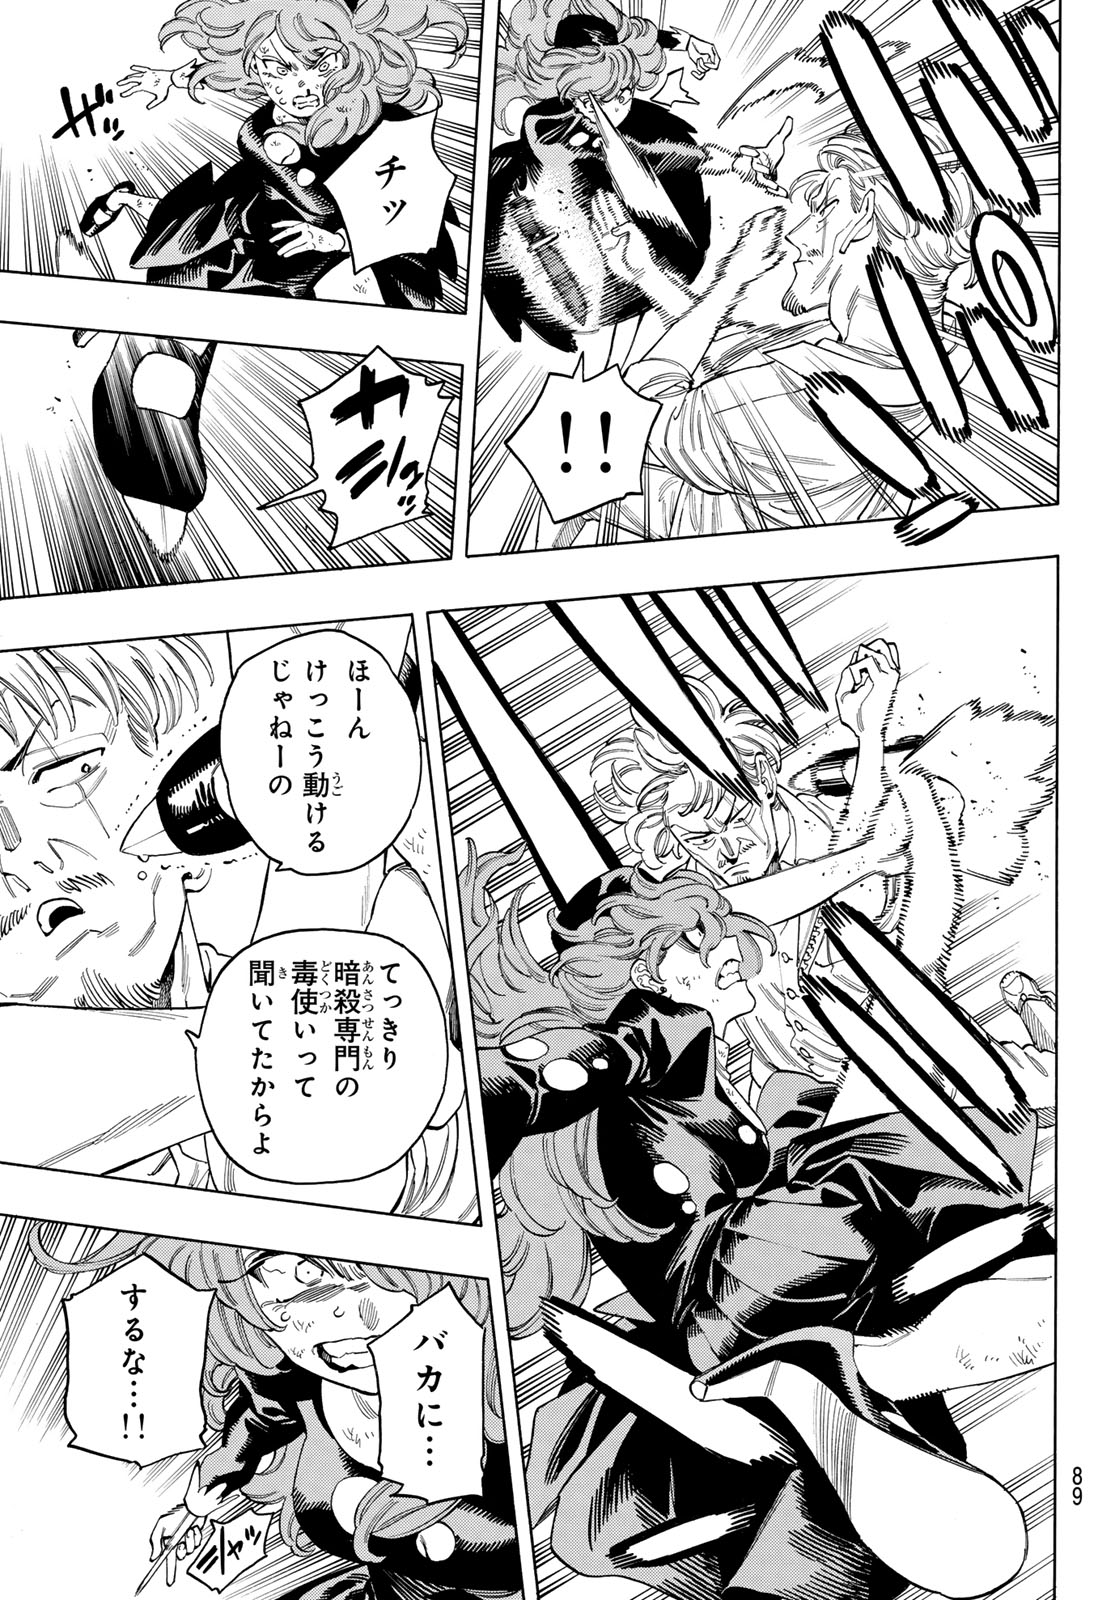 Akabane Honeko no Bodyguard - Chapter 83 - Page 9